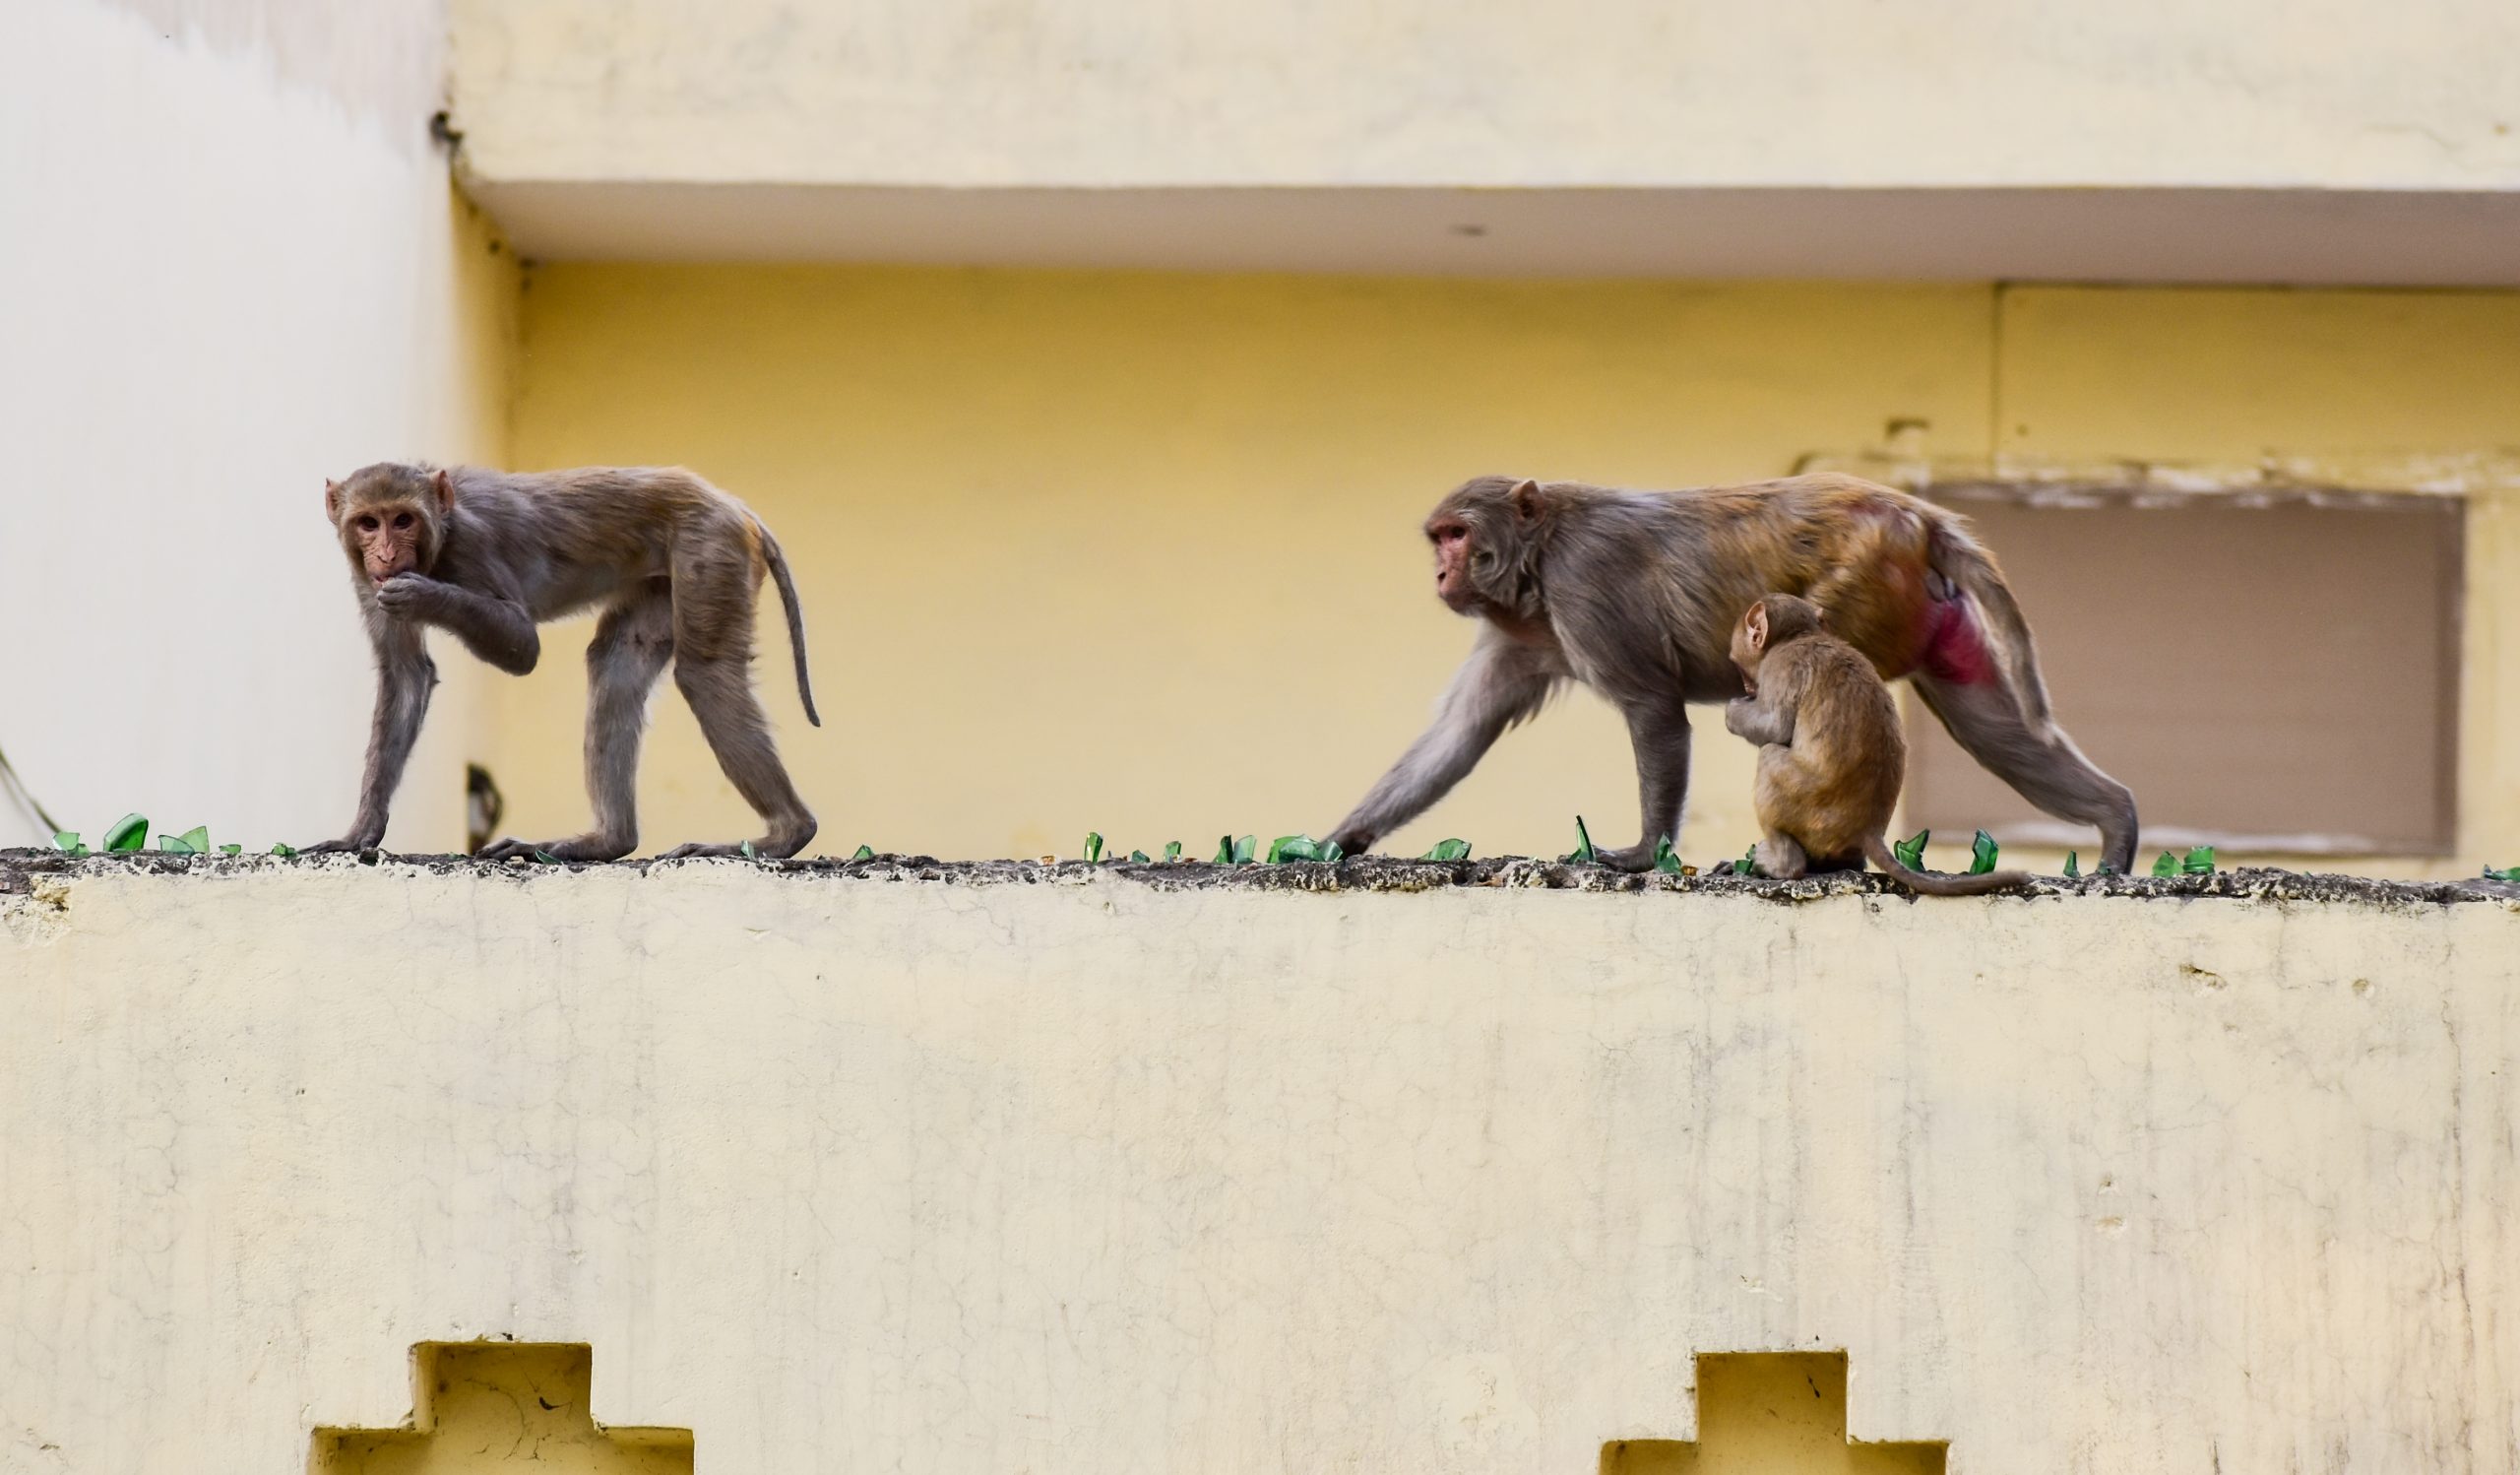 three monkeys sitting on the wall